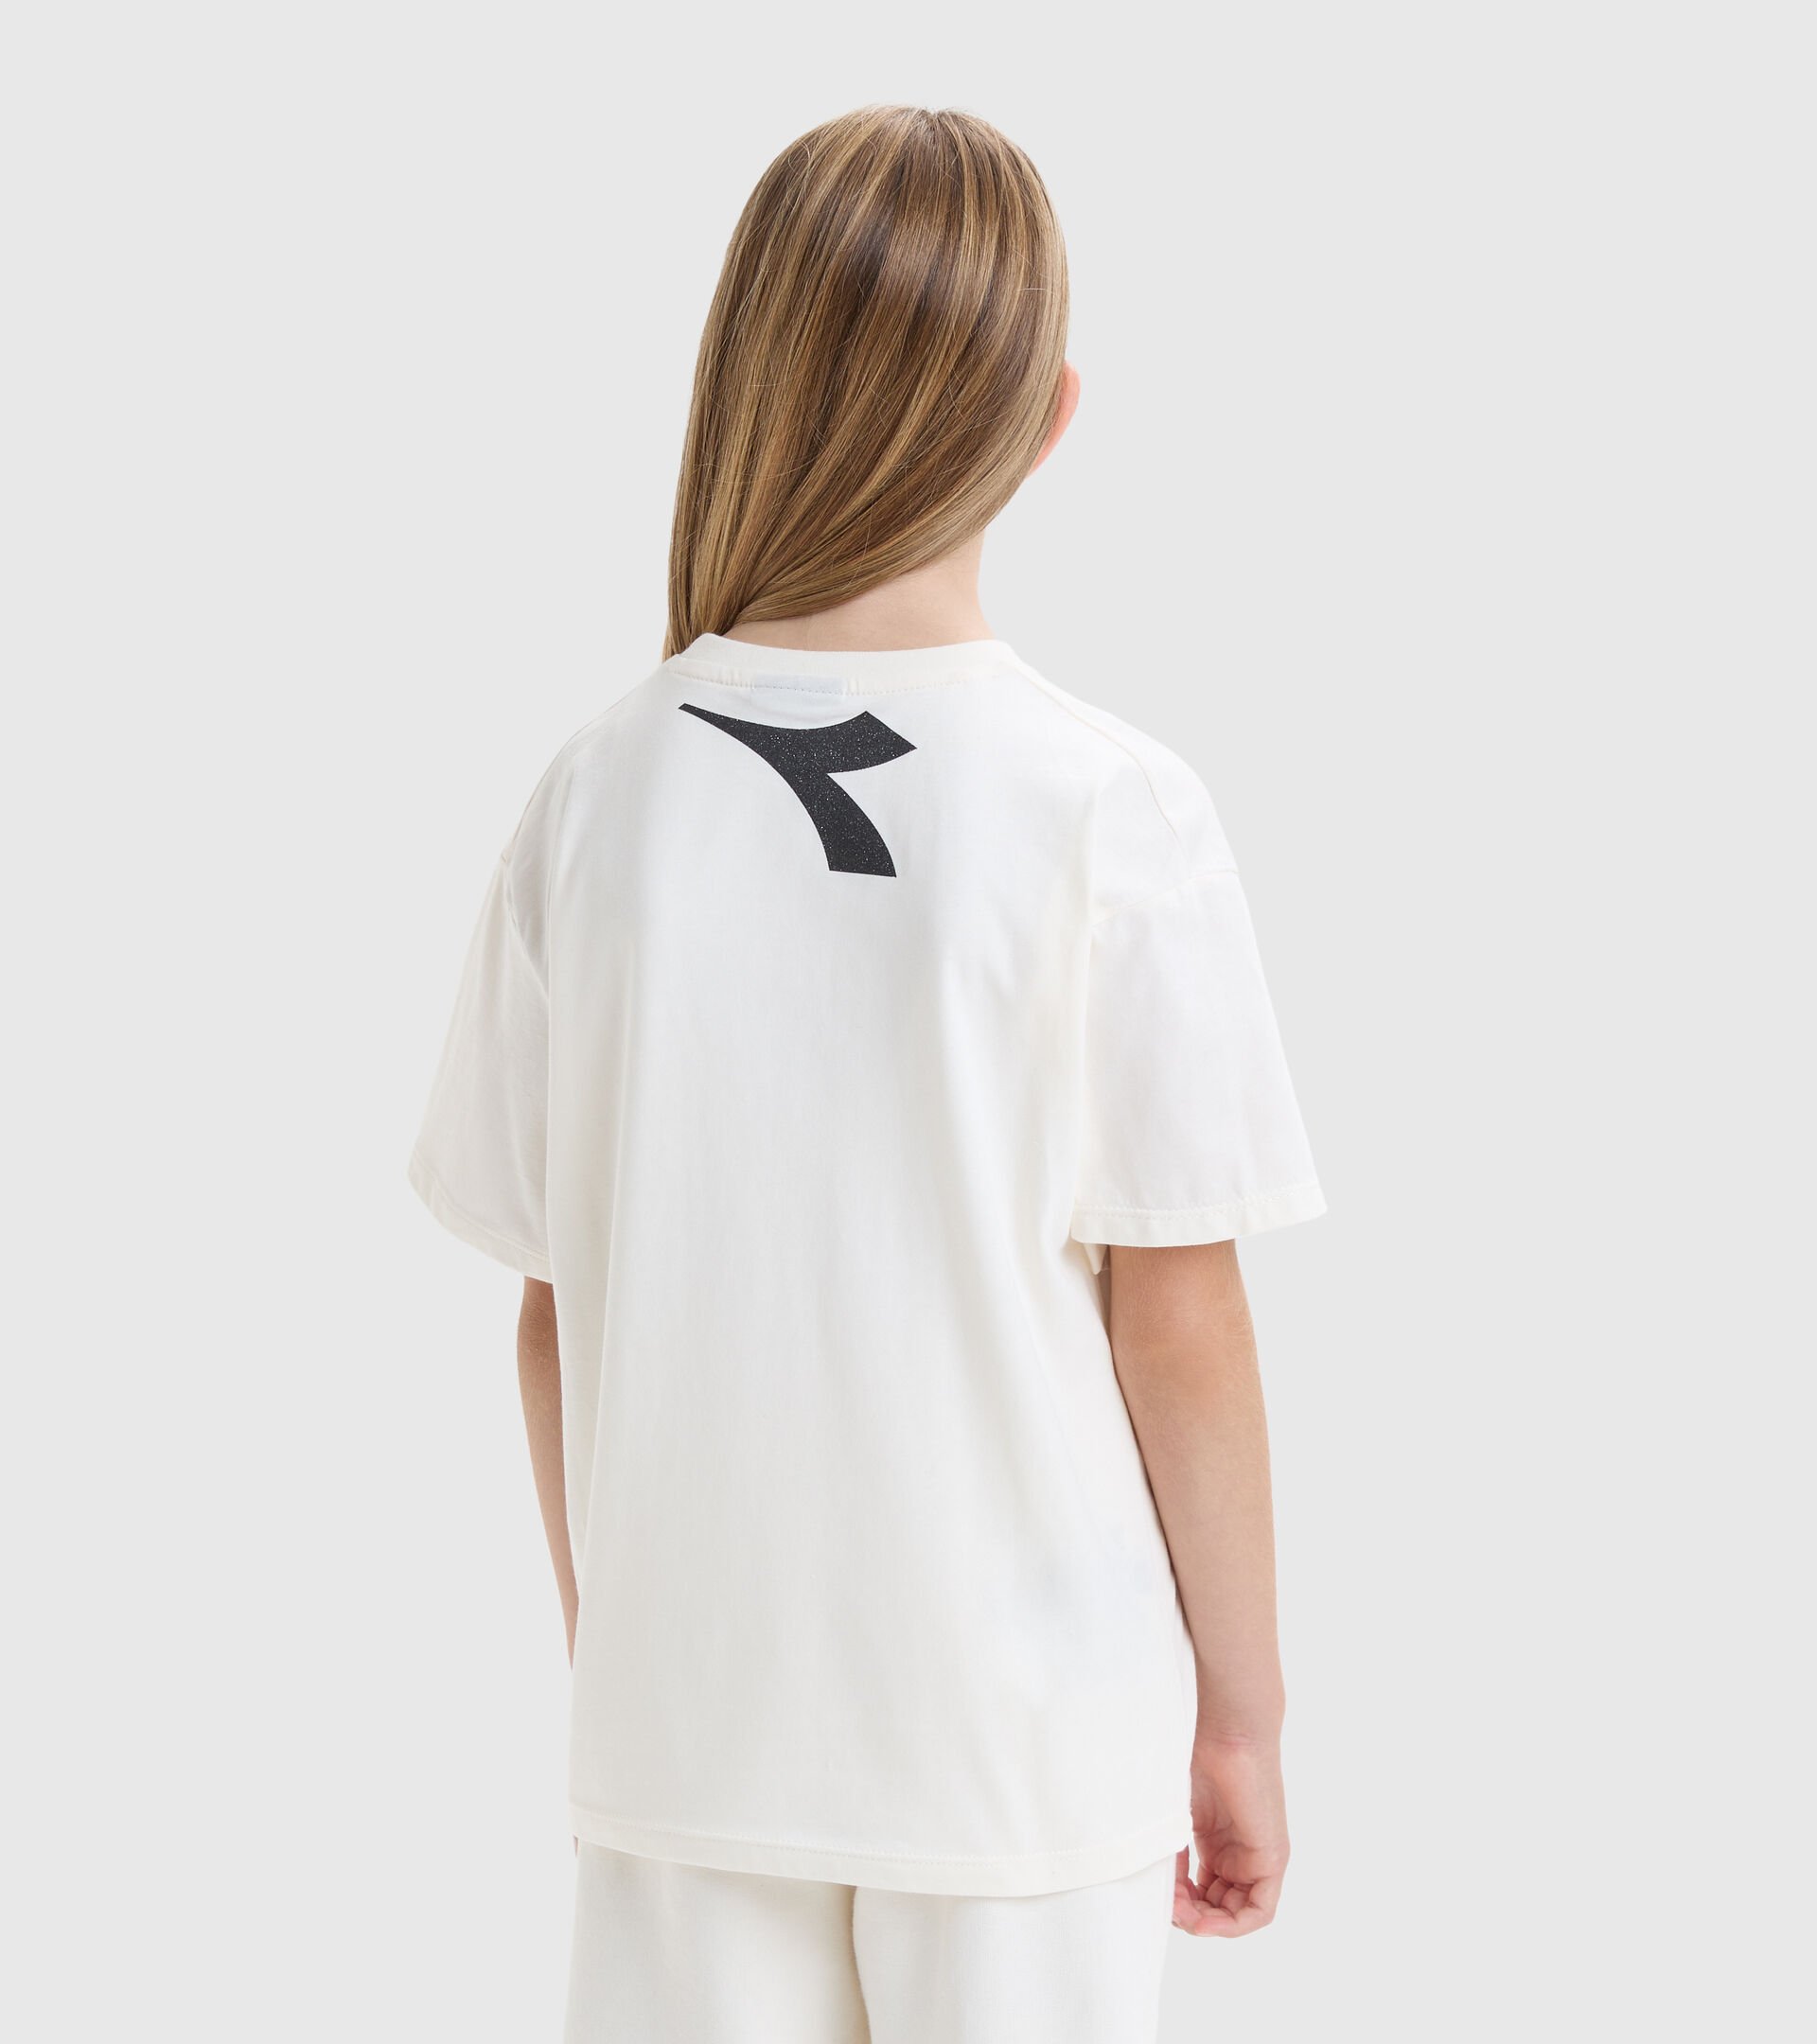 Logo T-shirt - Girl JG.T-SHIRT D YELLOW CREAM - Diadora